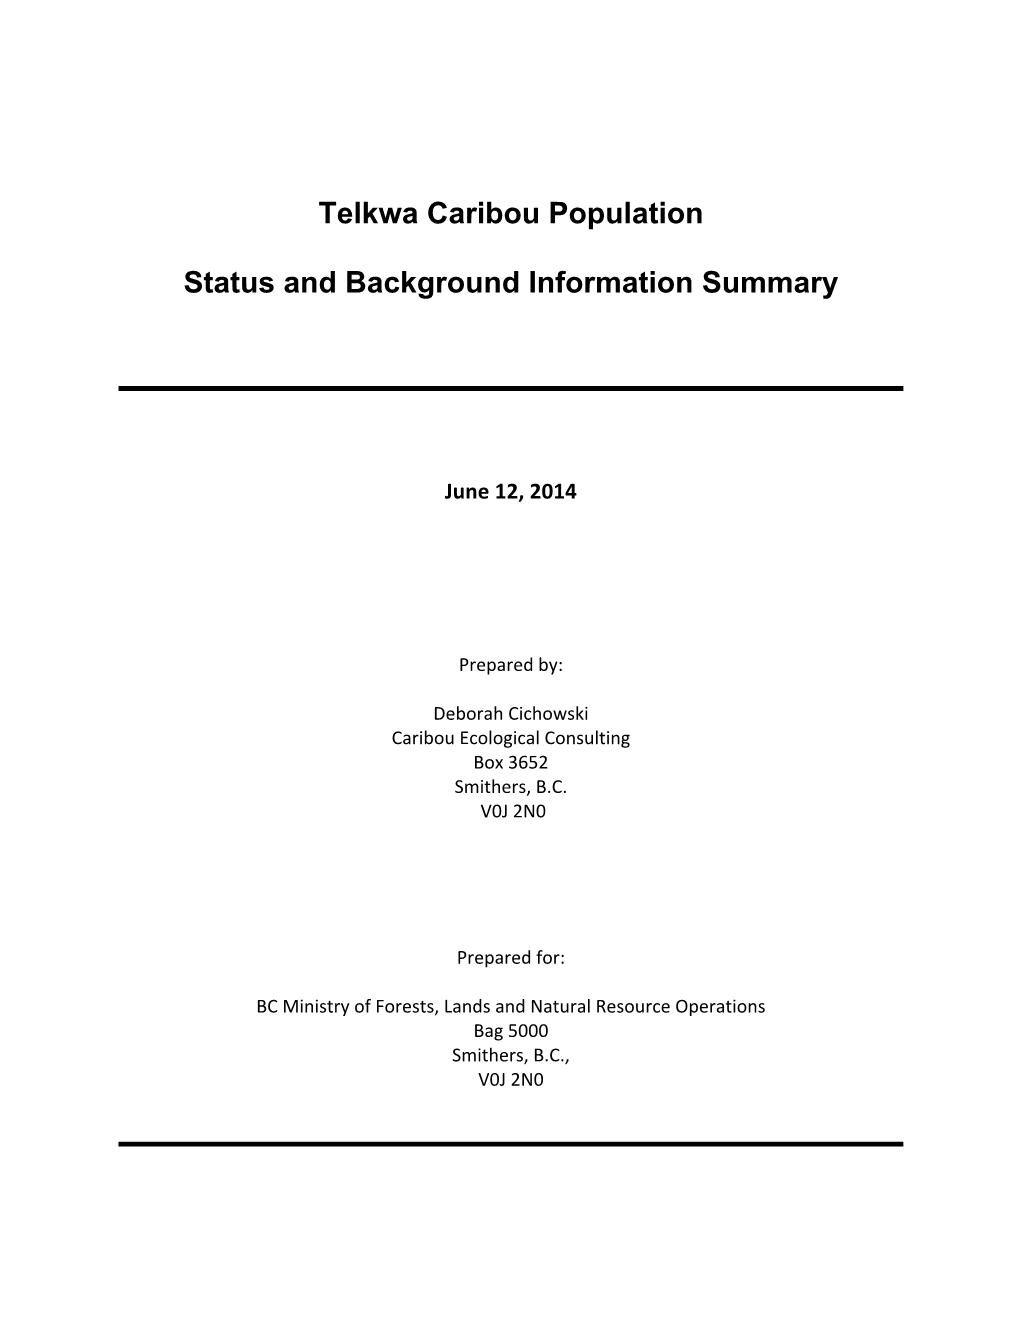 Telkwa Caribou Population Status and Background Information Summary